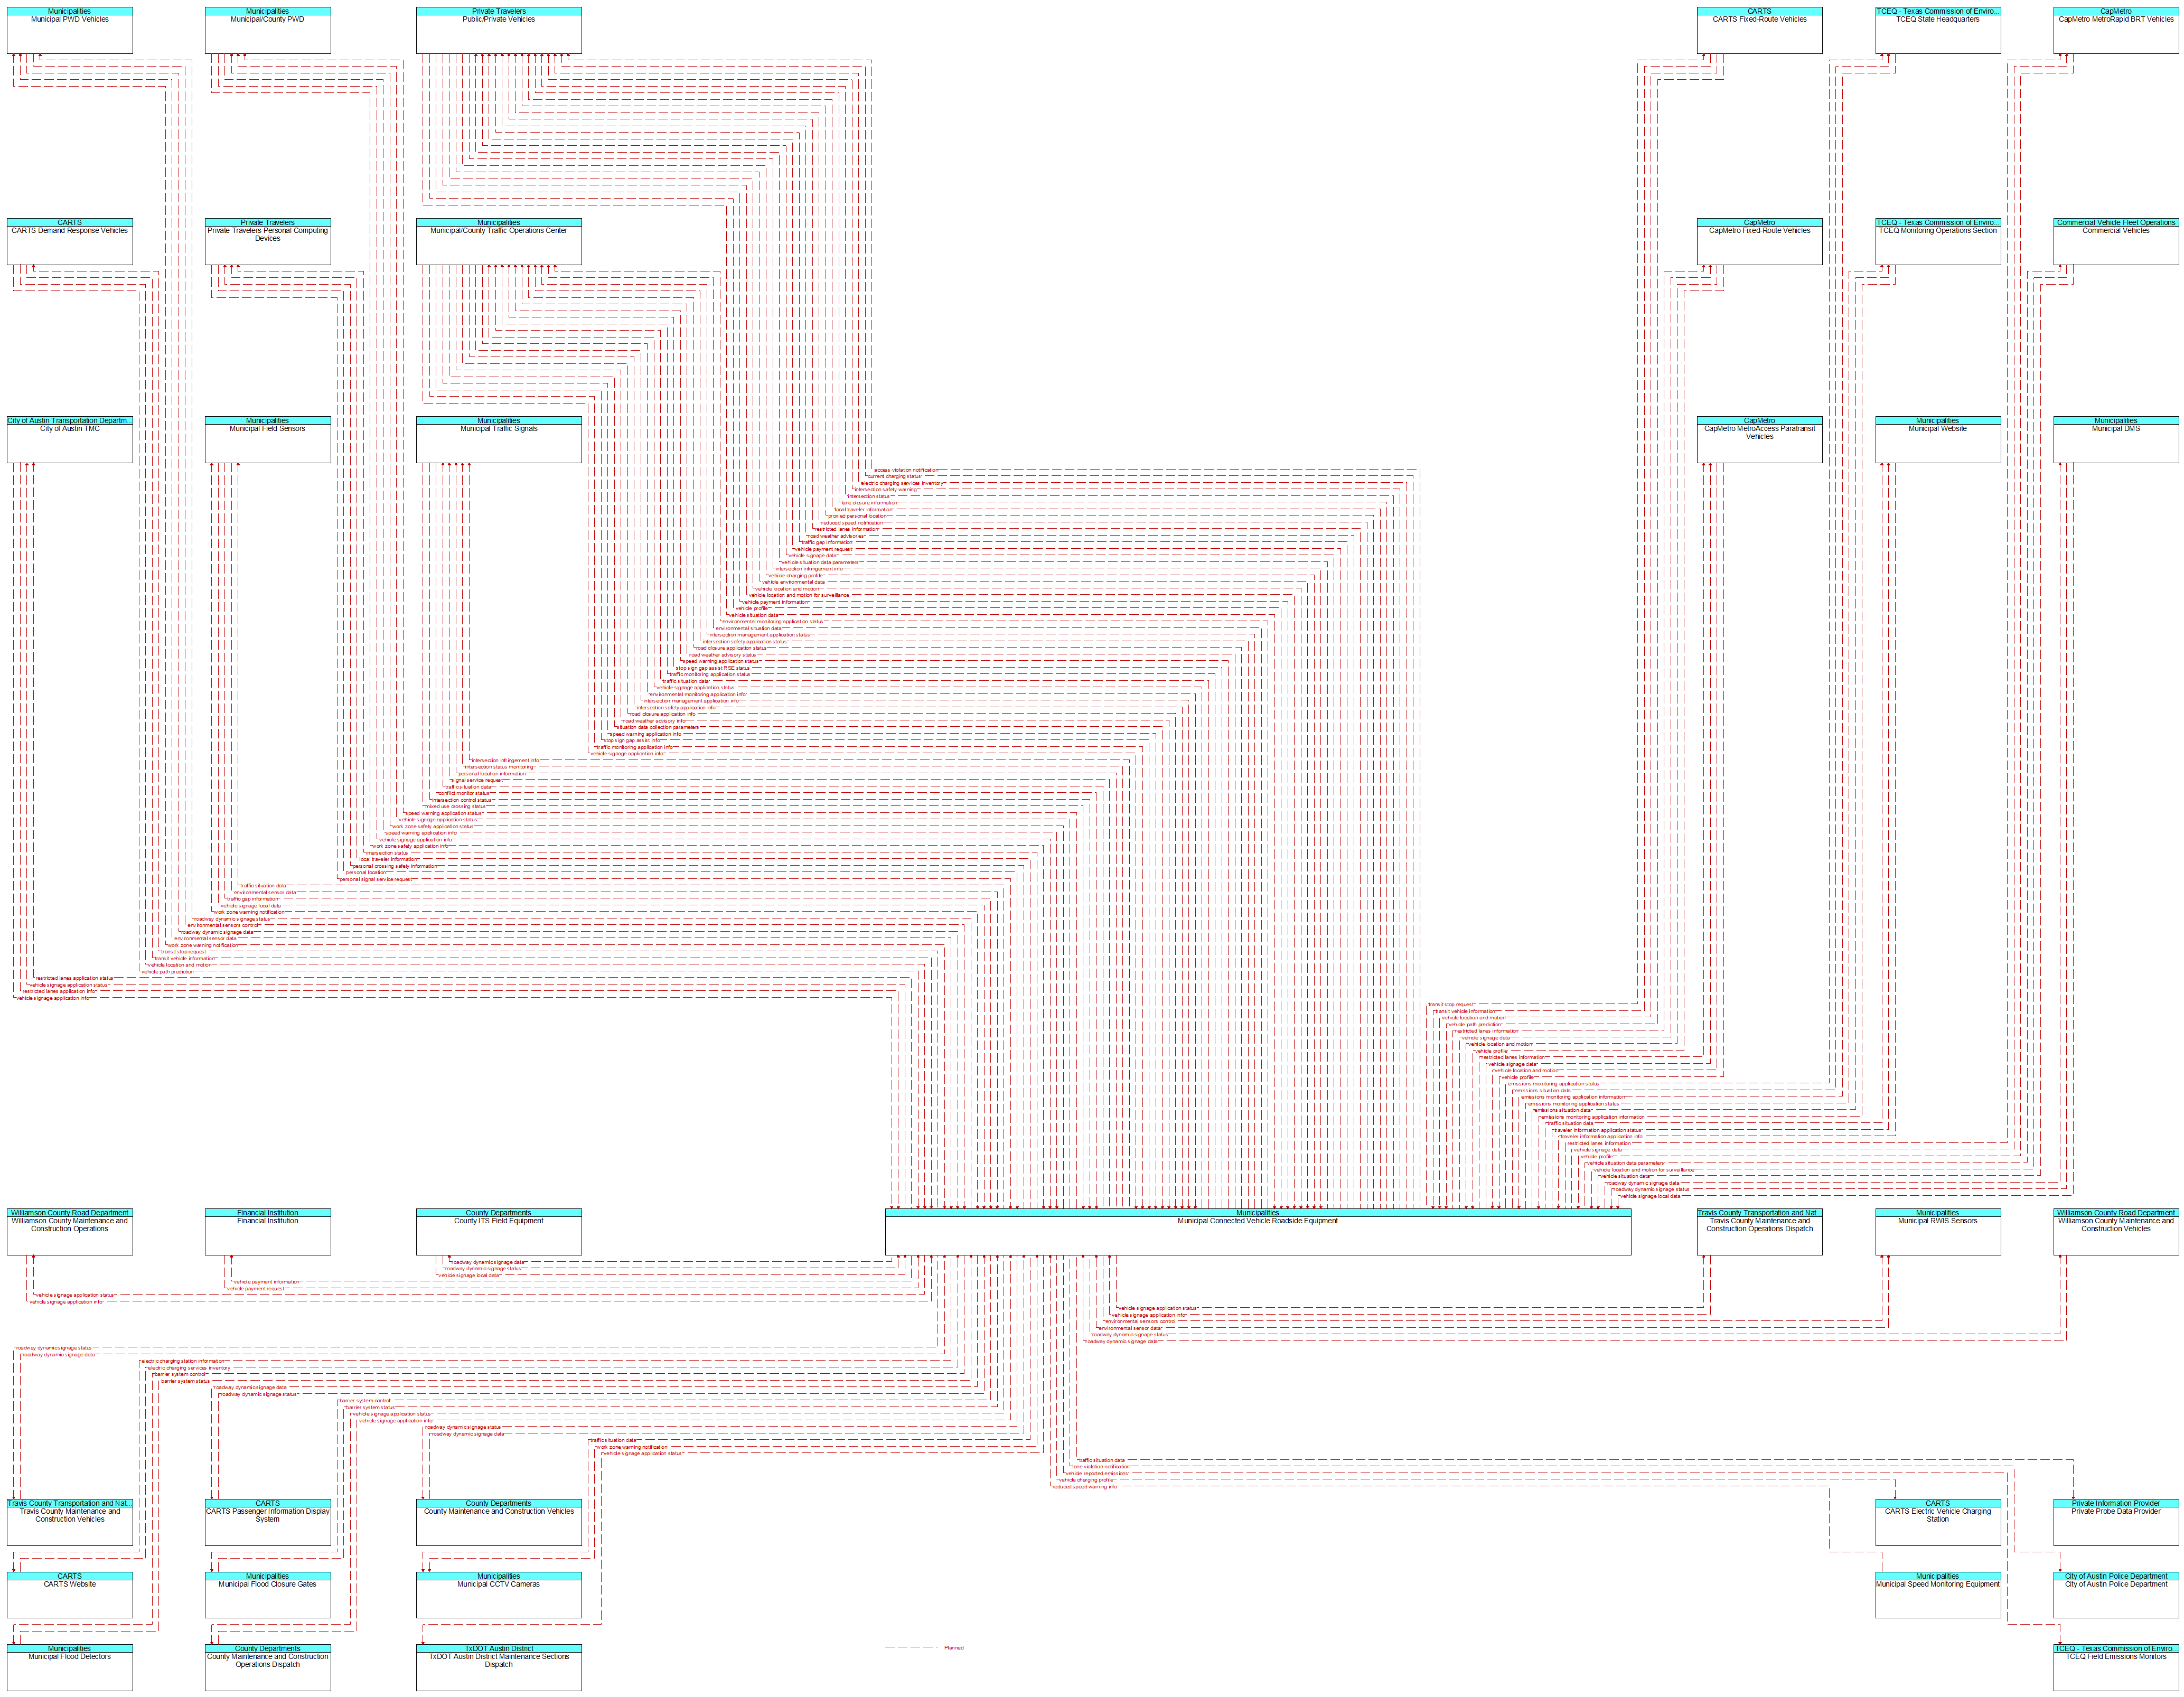 Context Diagram - Municipal Connected Vehicle Roadside Equipment